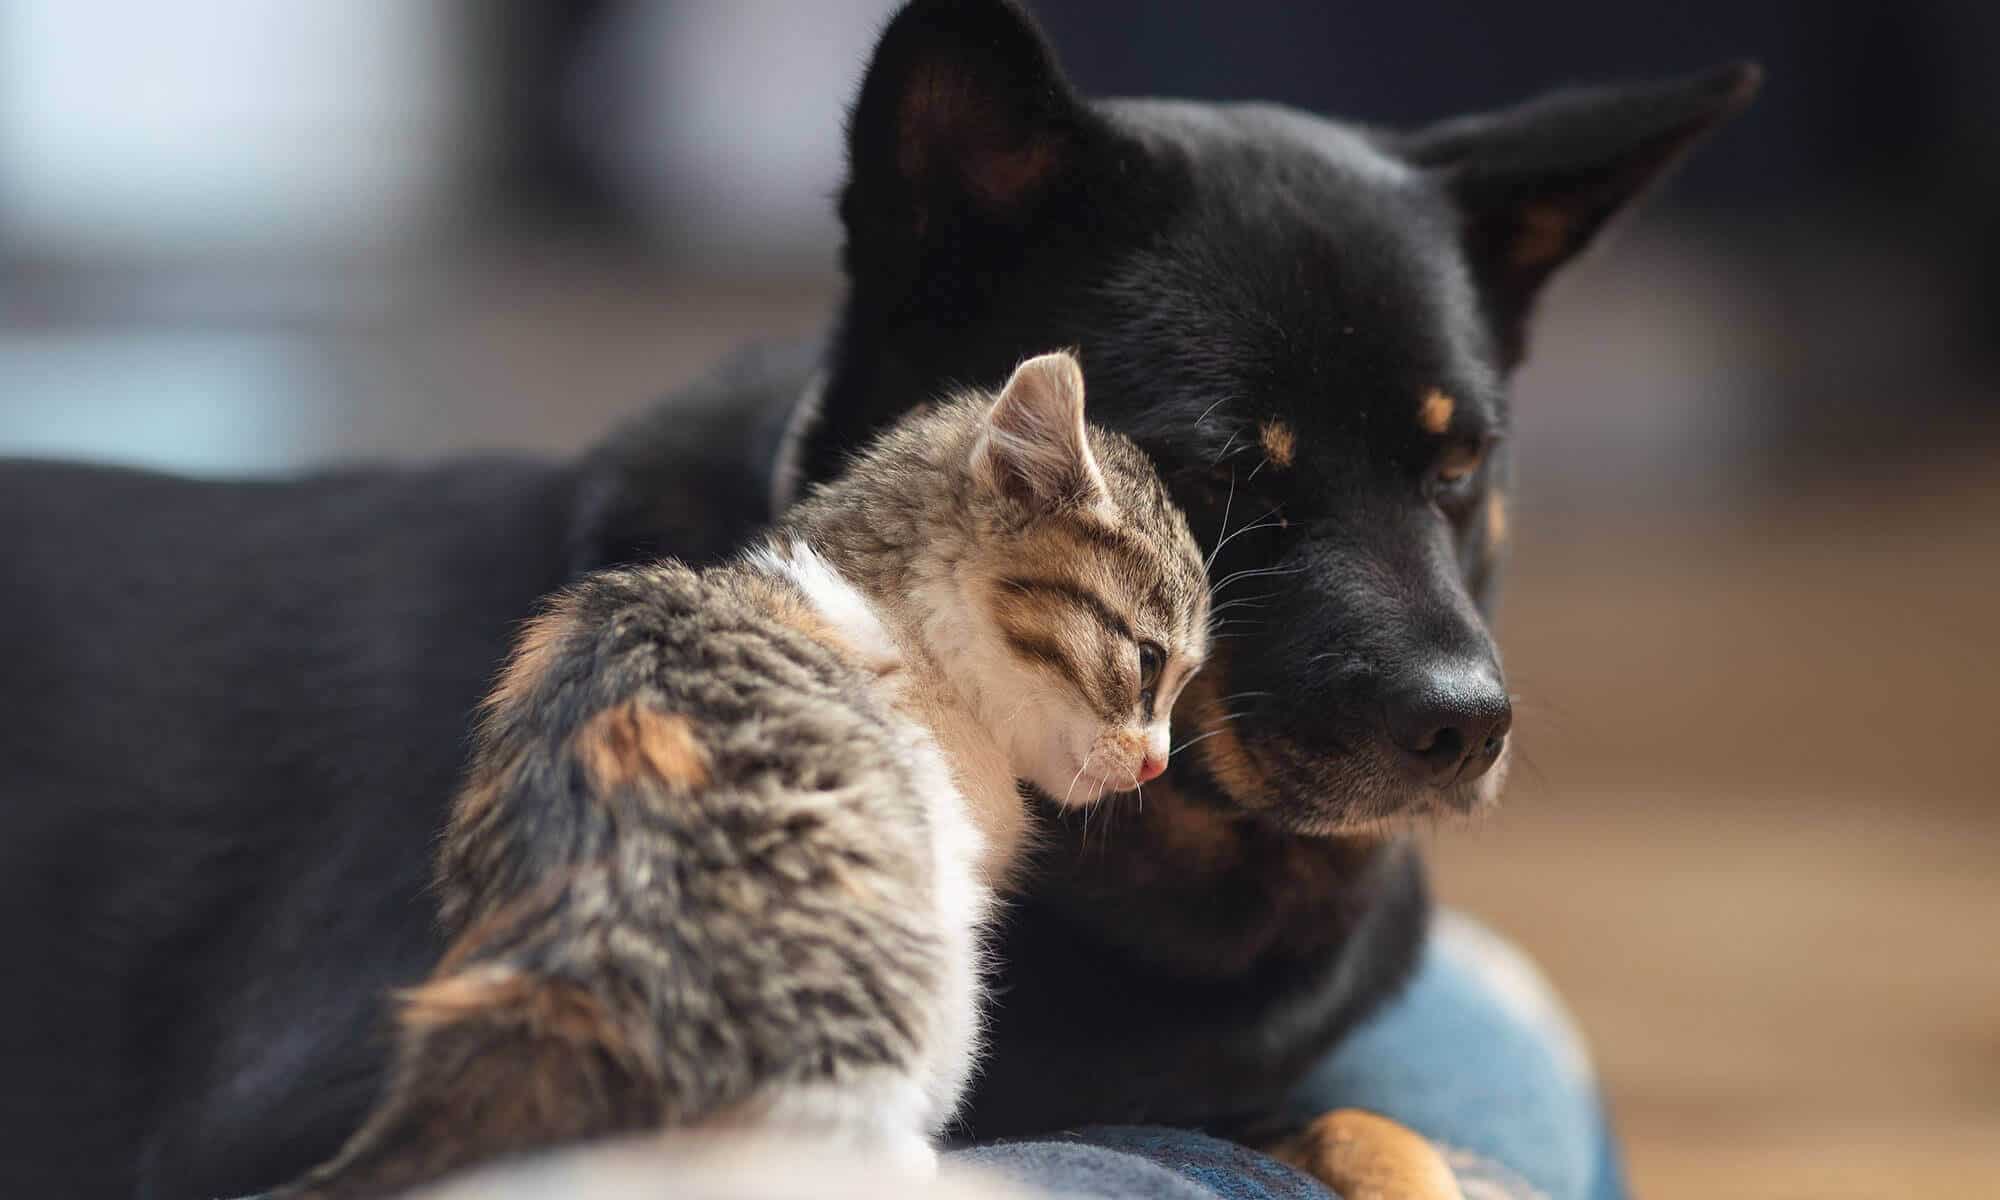 A cat and dog cuddling